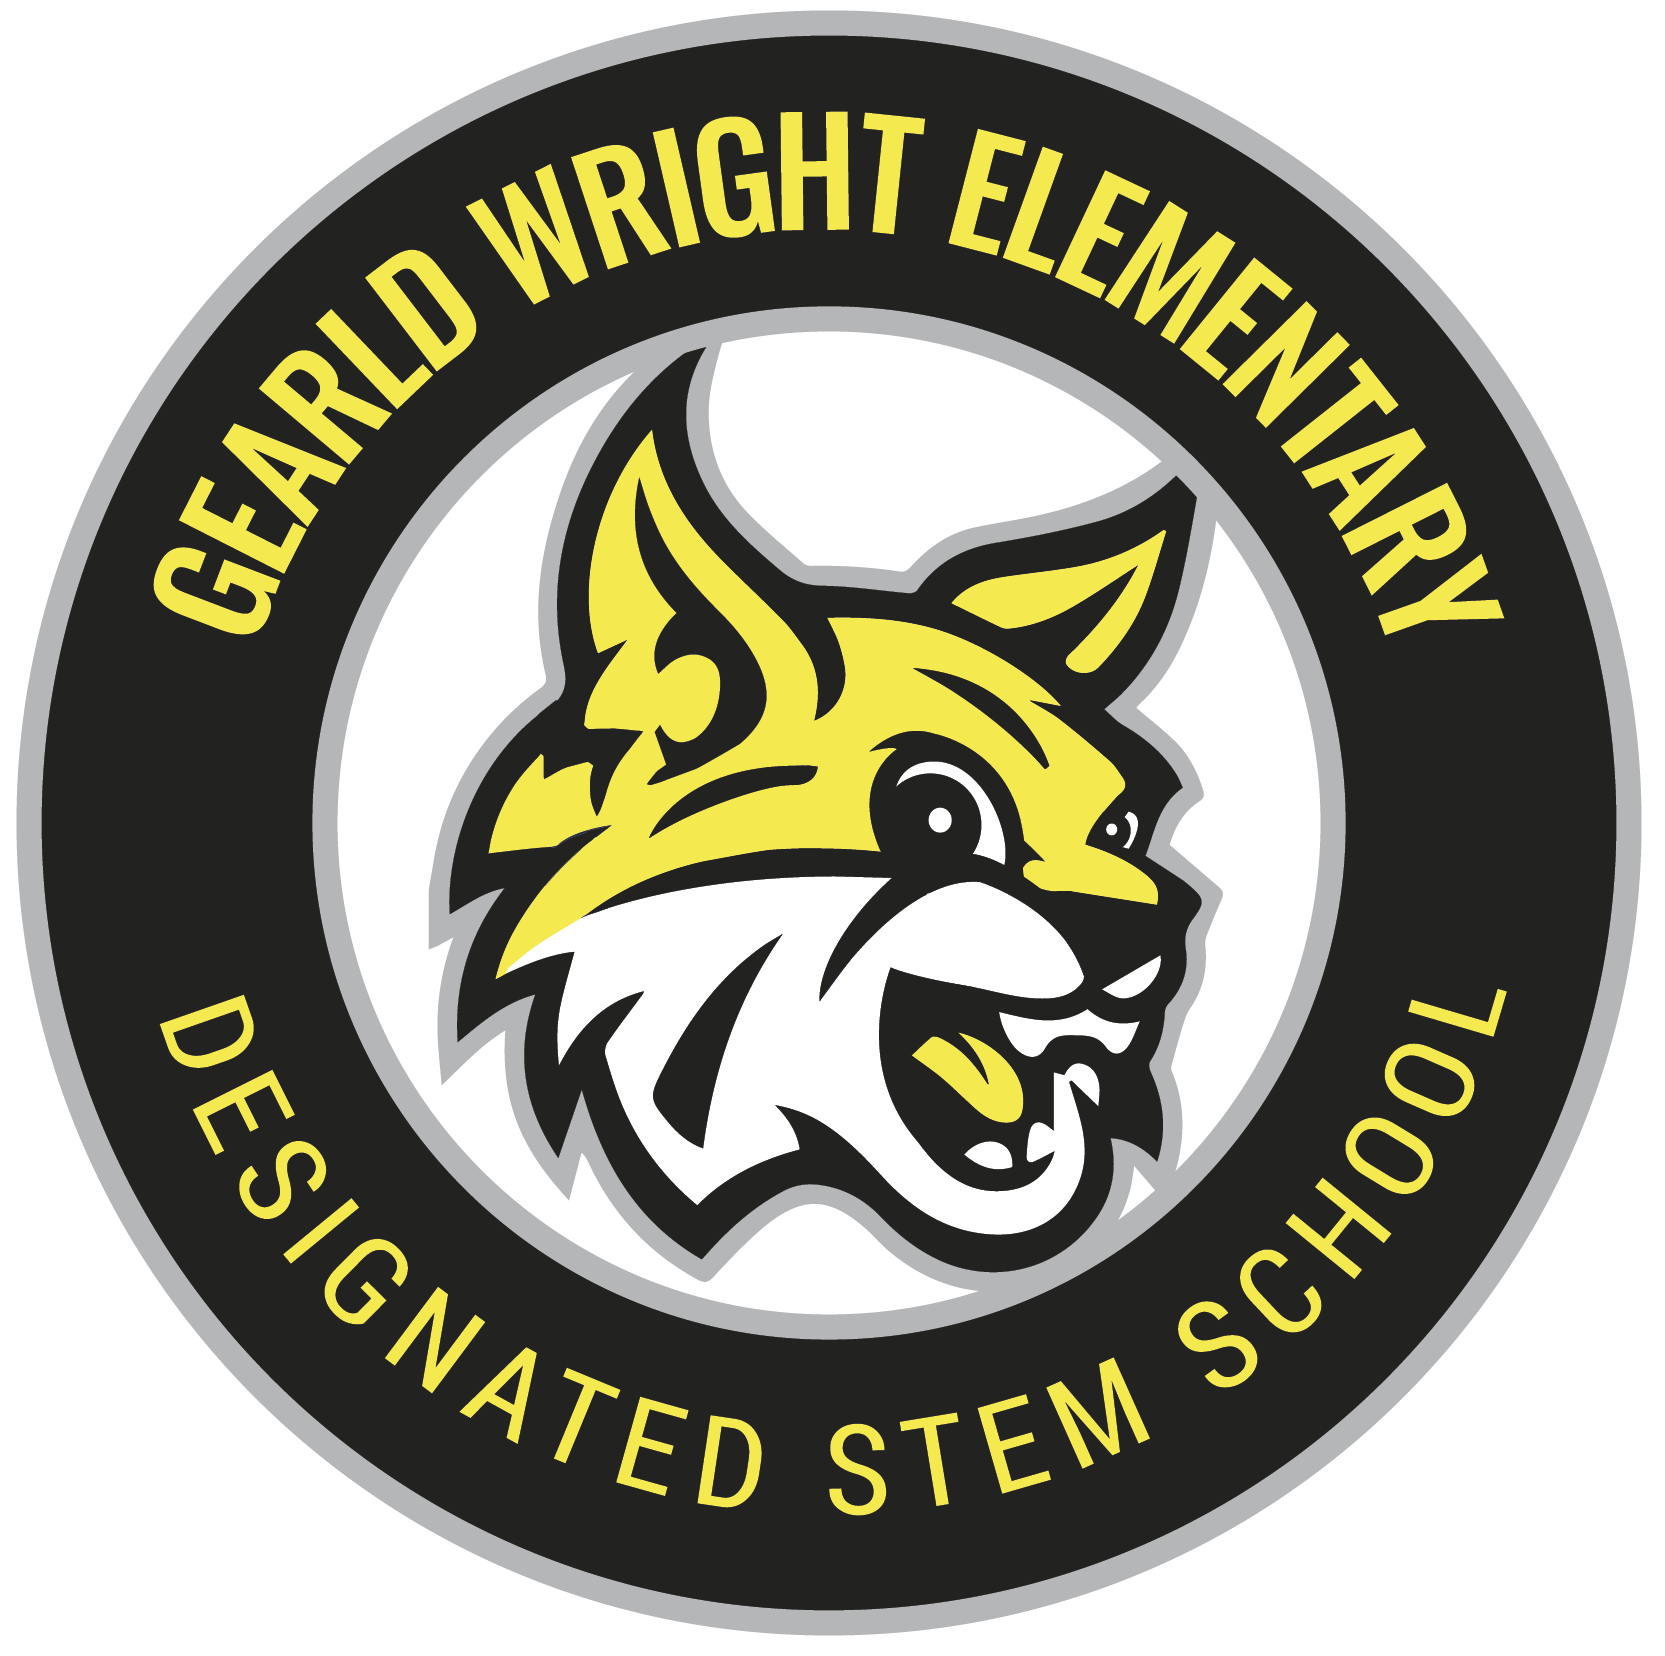 Gearld Wright STEM Elementary